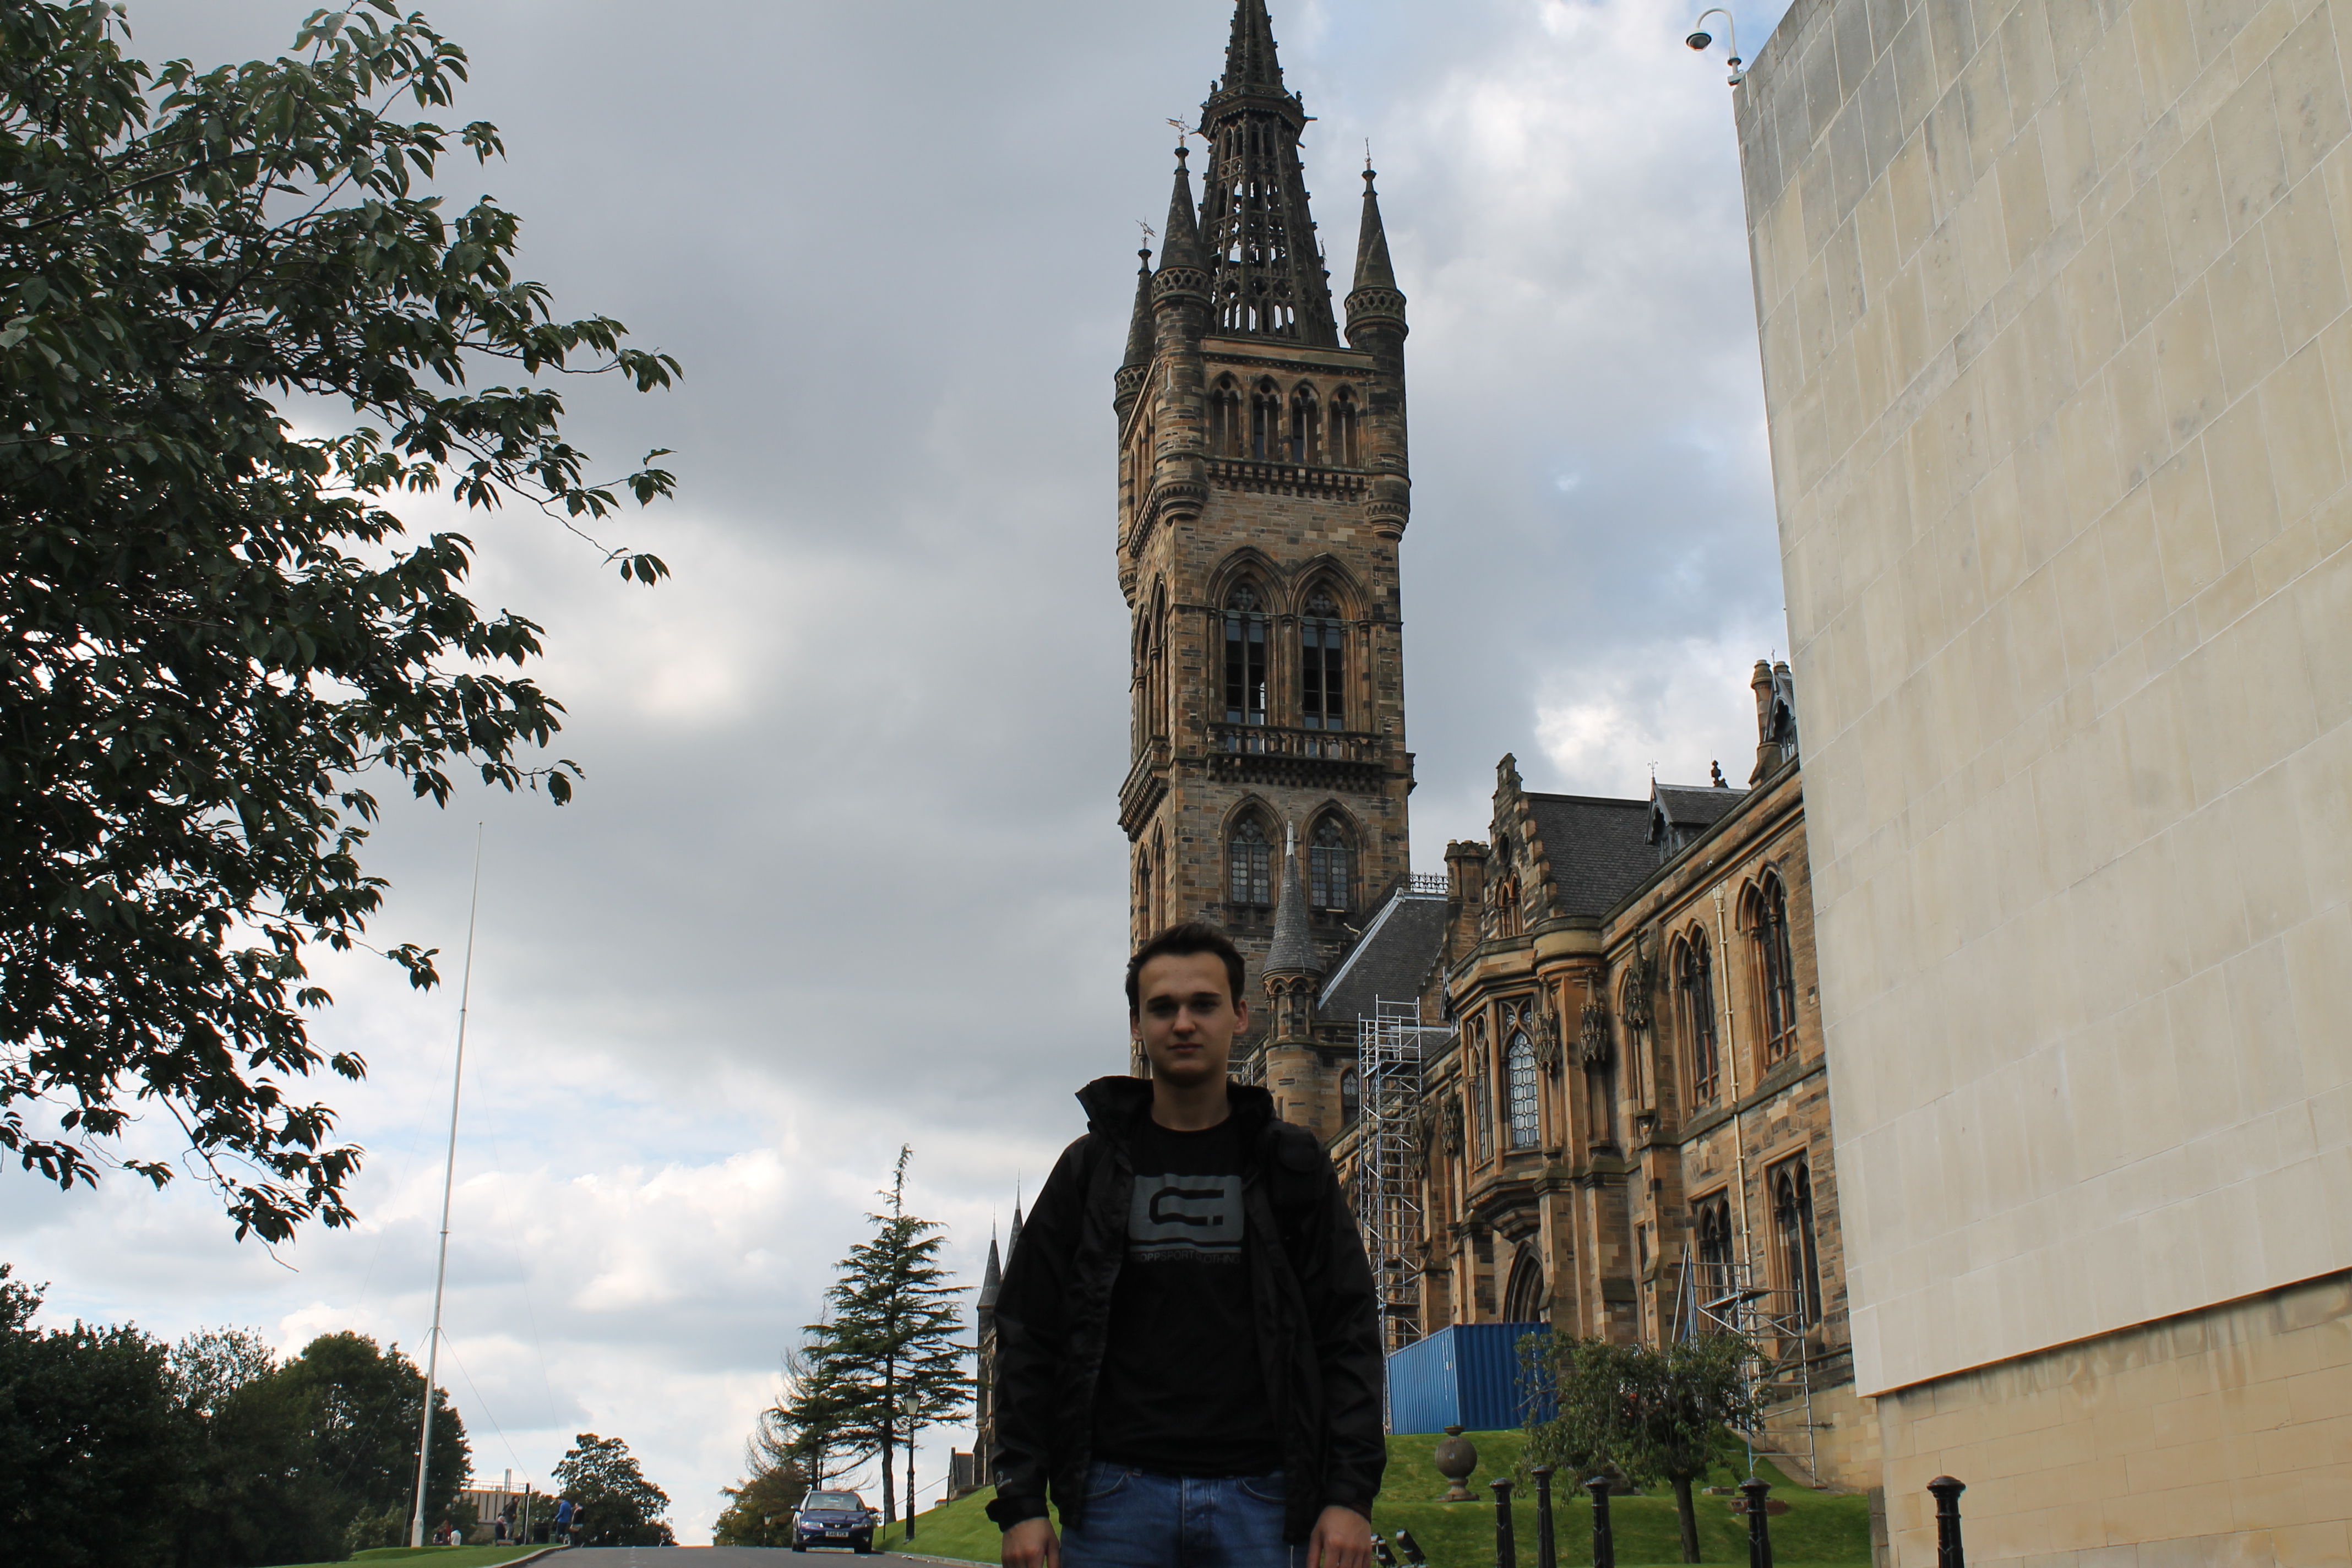 The University of Glasgow.